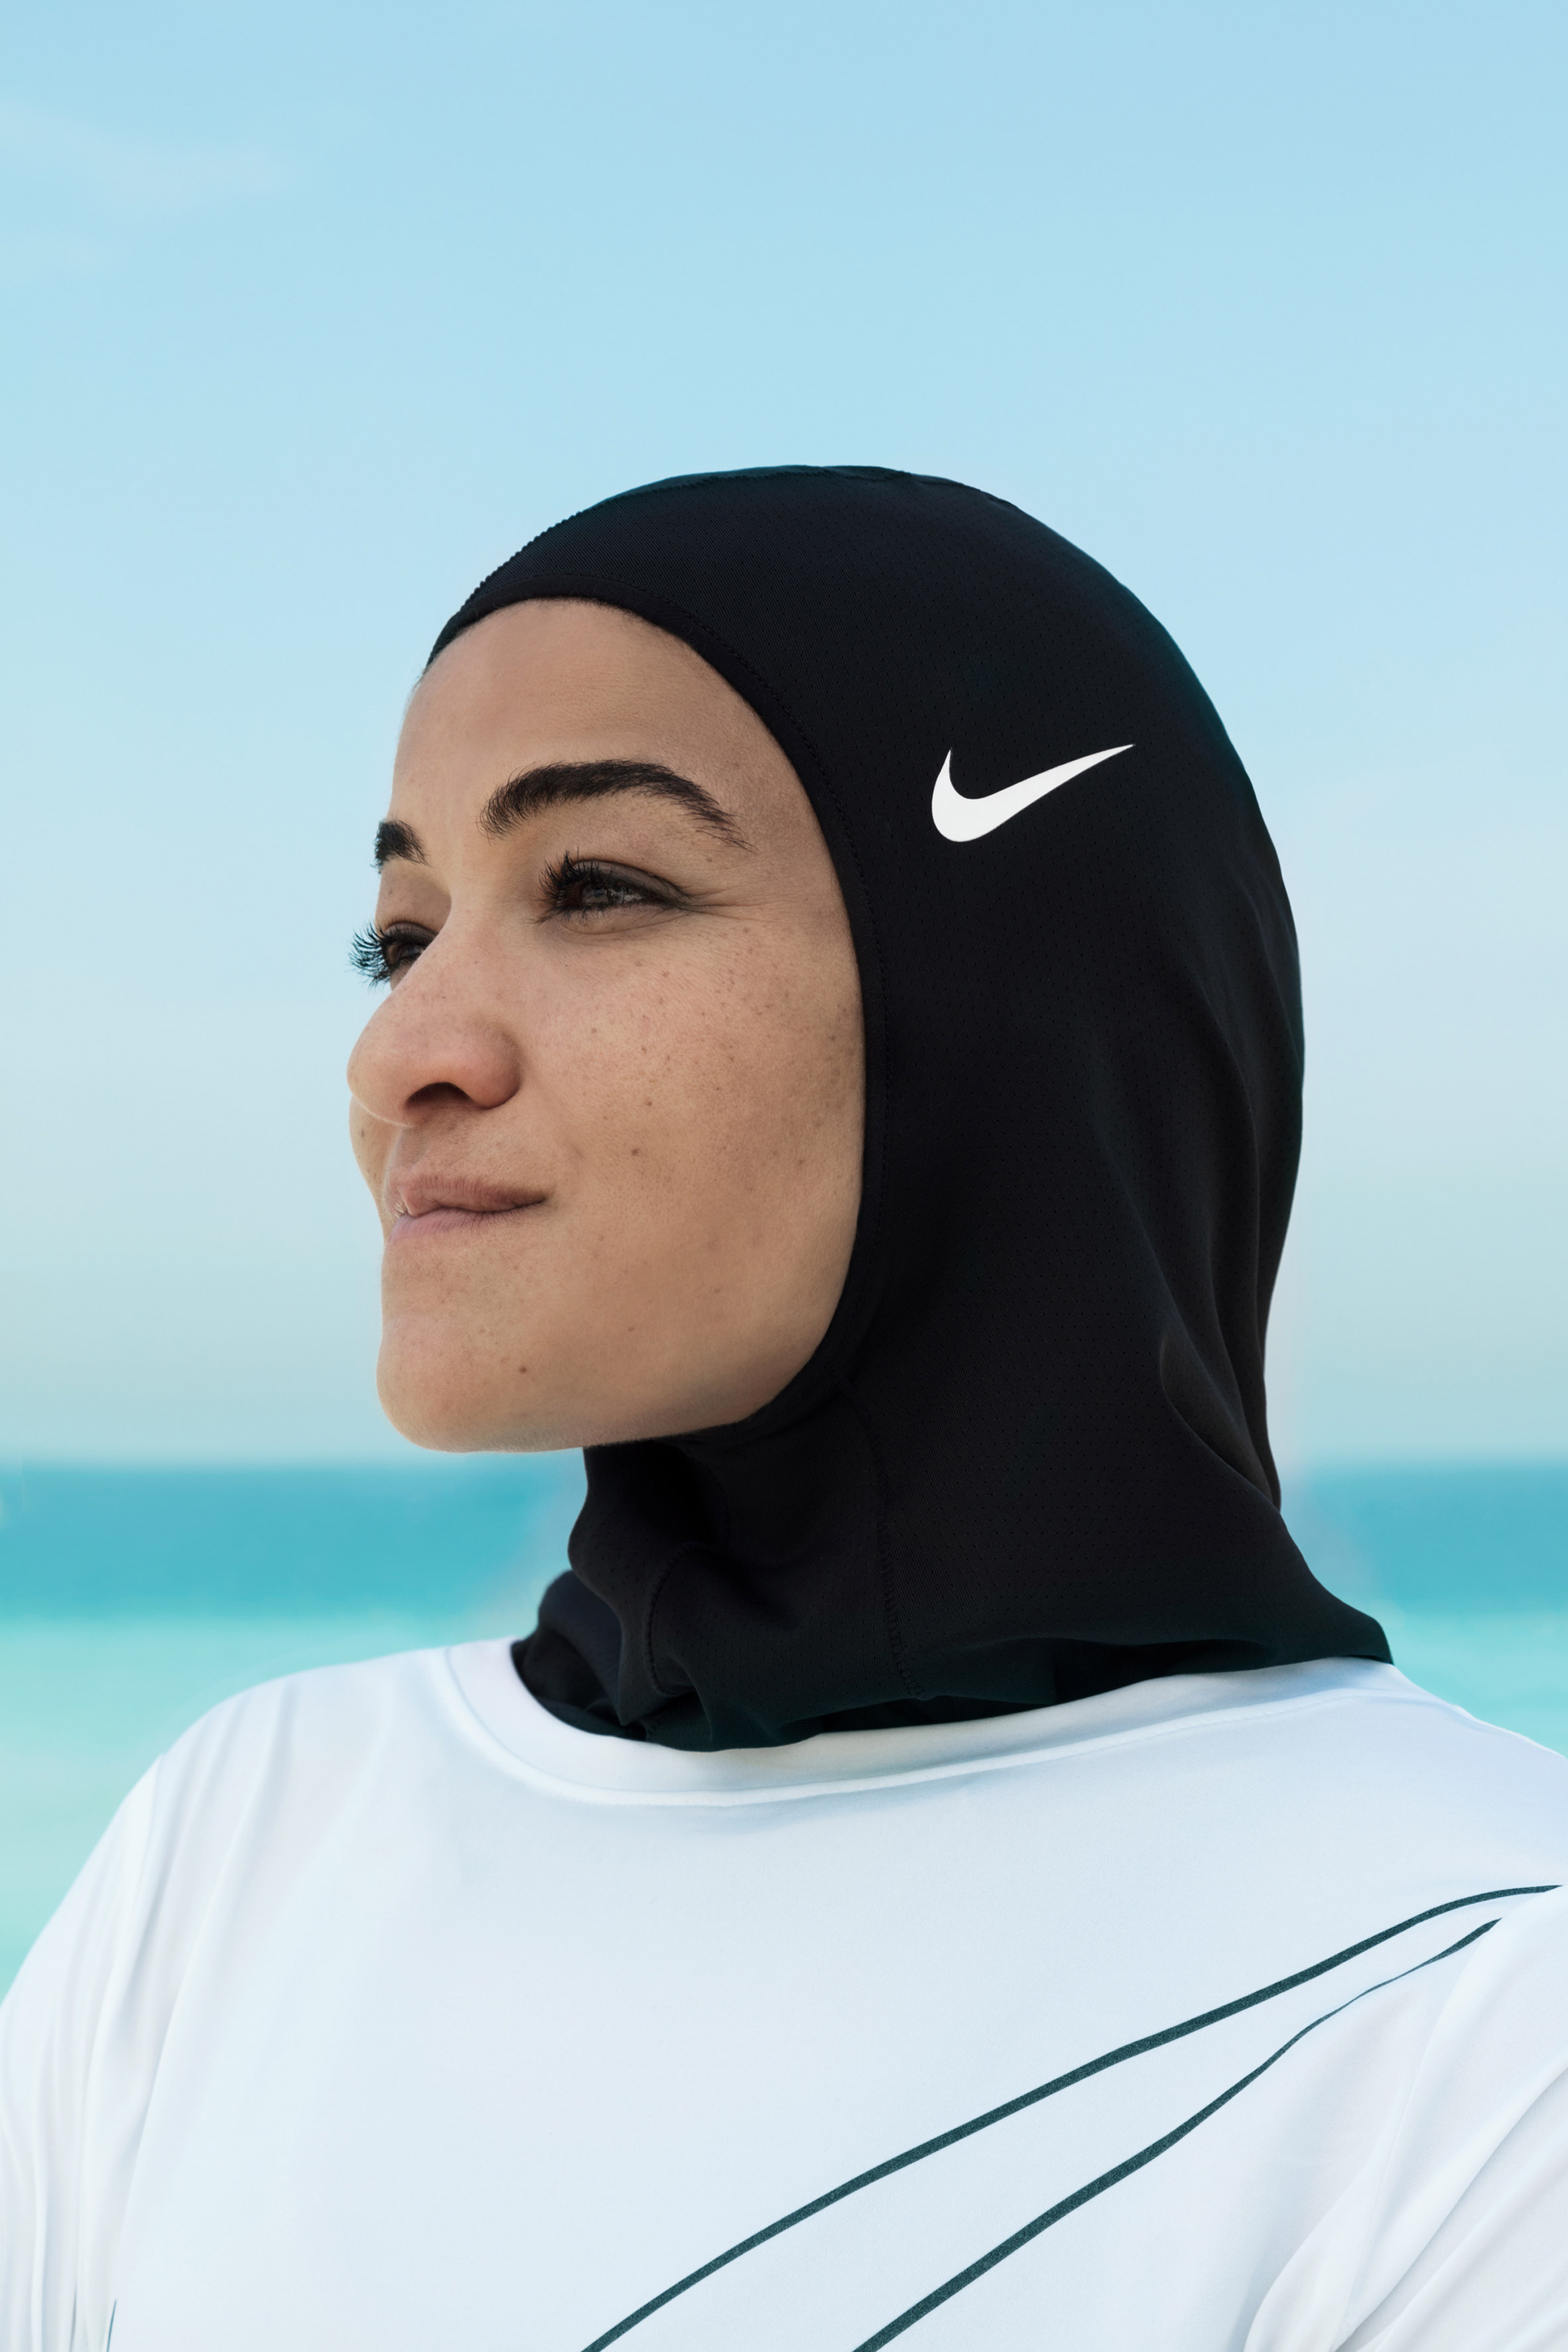 Pro Hijab for female Muslim athletes